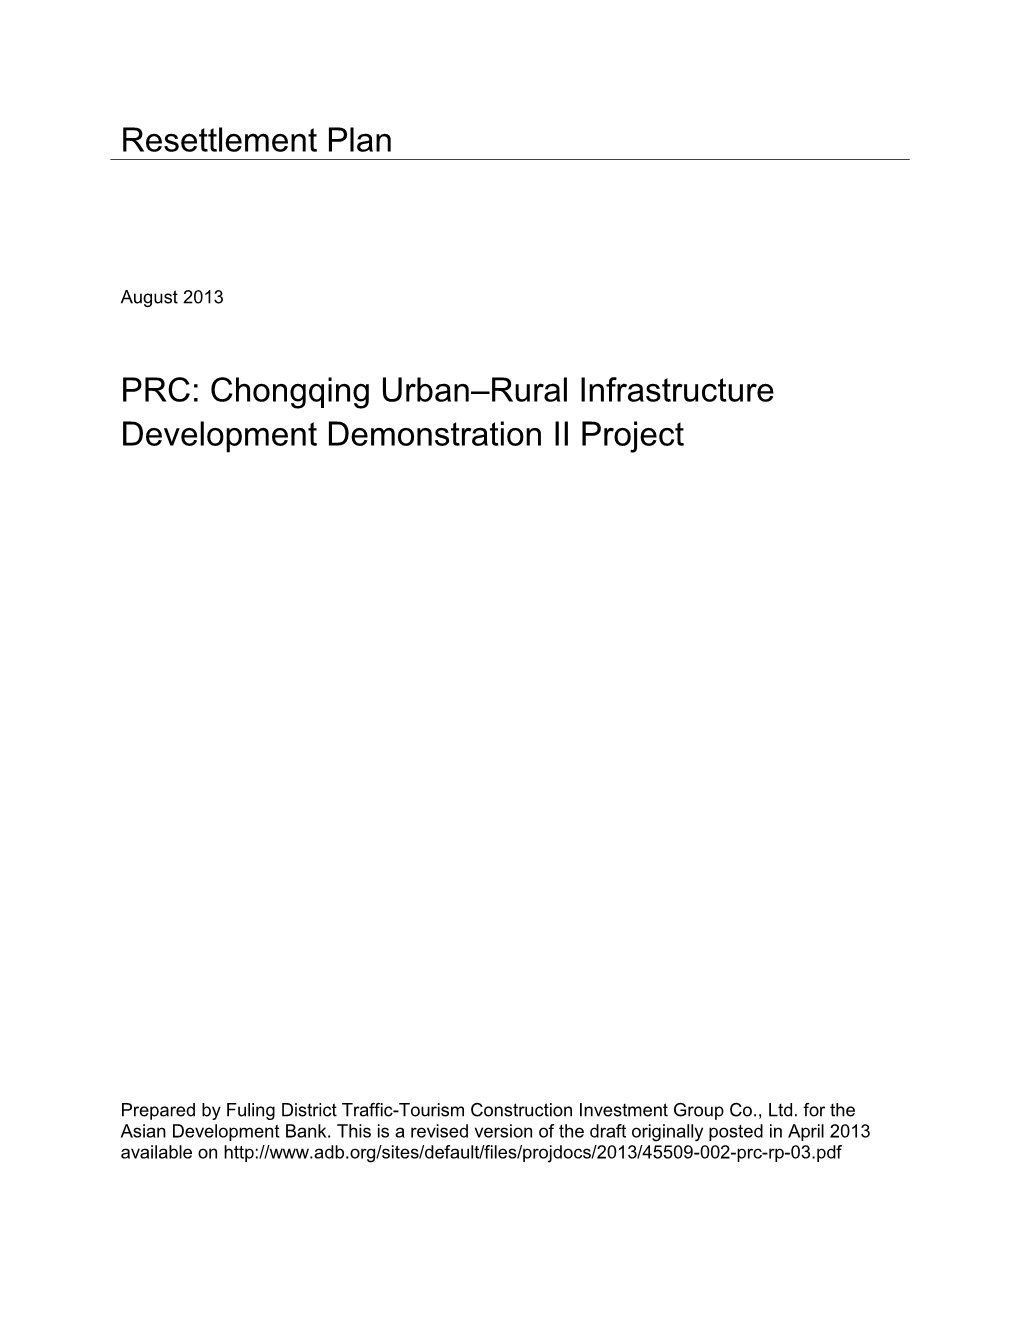 Chongqing Urban-Rural Infrastructure Development Demonstration II Project